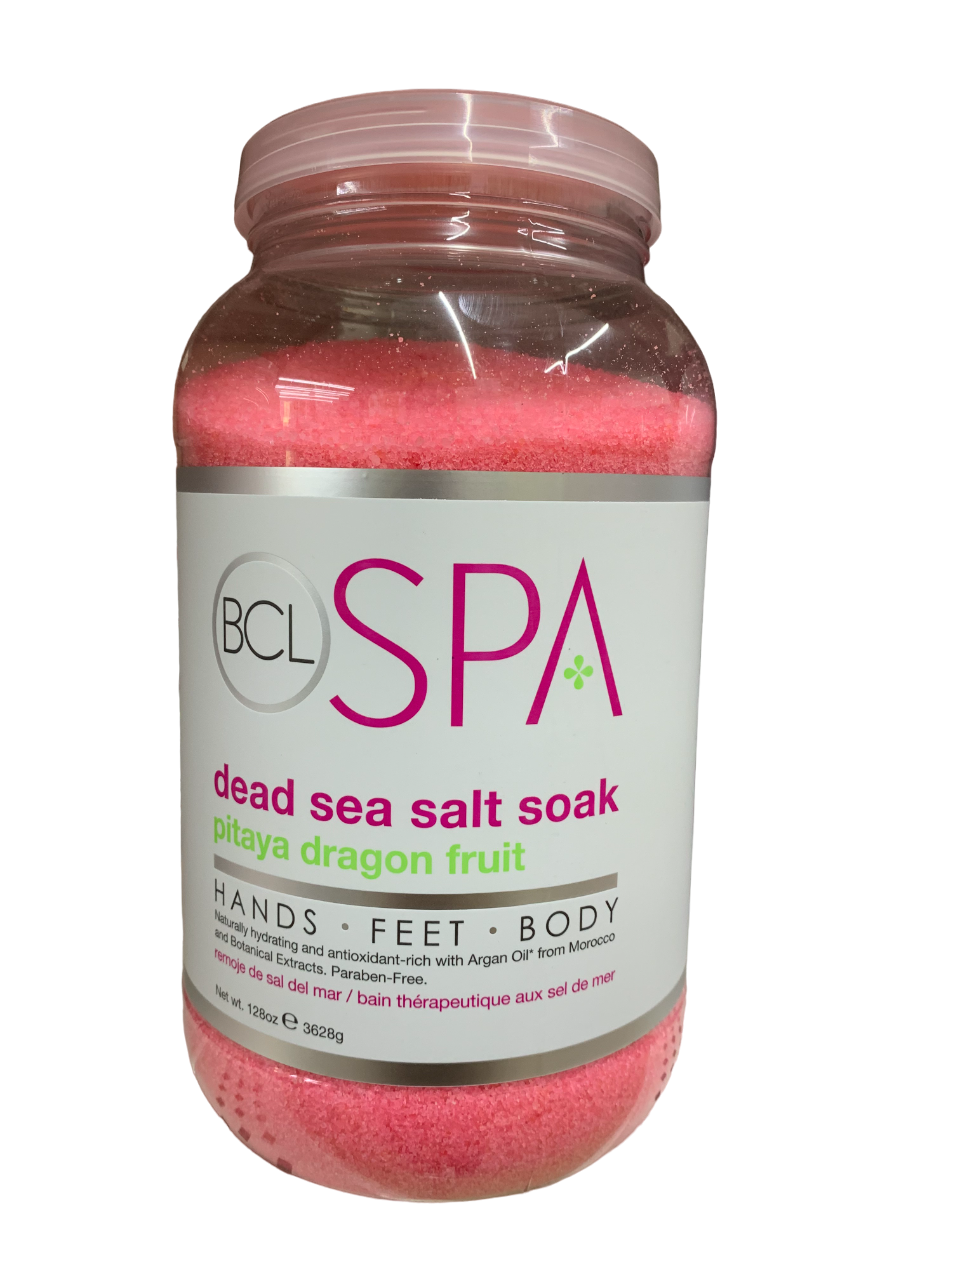 BCL Spa Dead Sea Salt Soak Pitaya Dragon Fruit